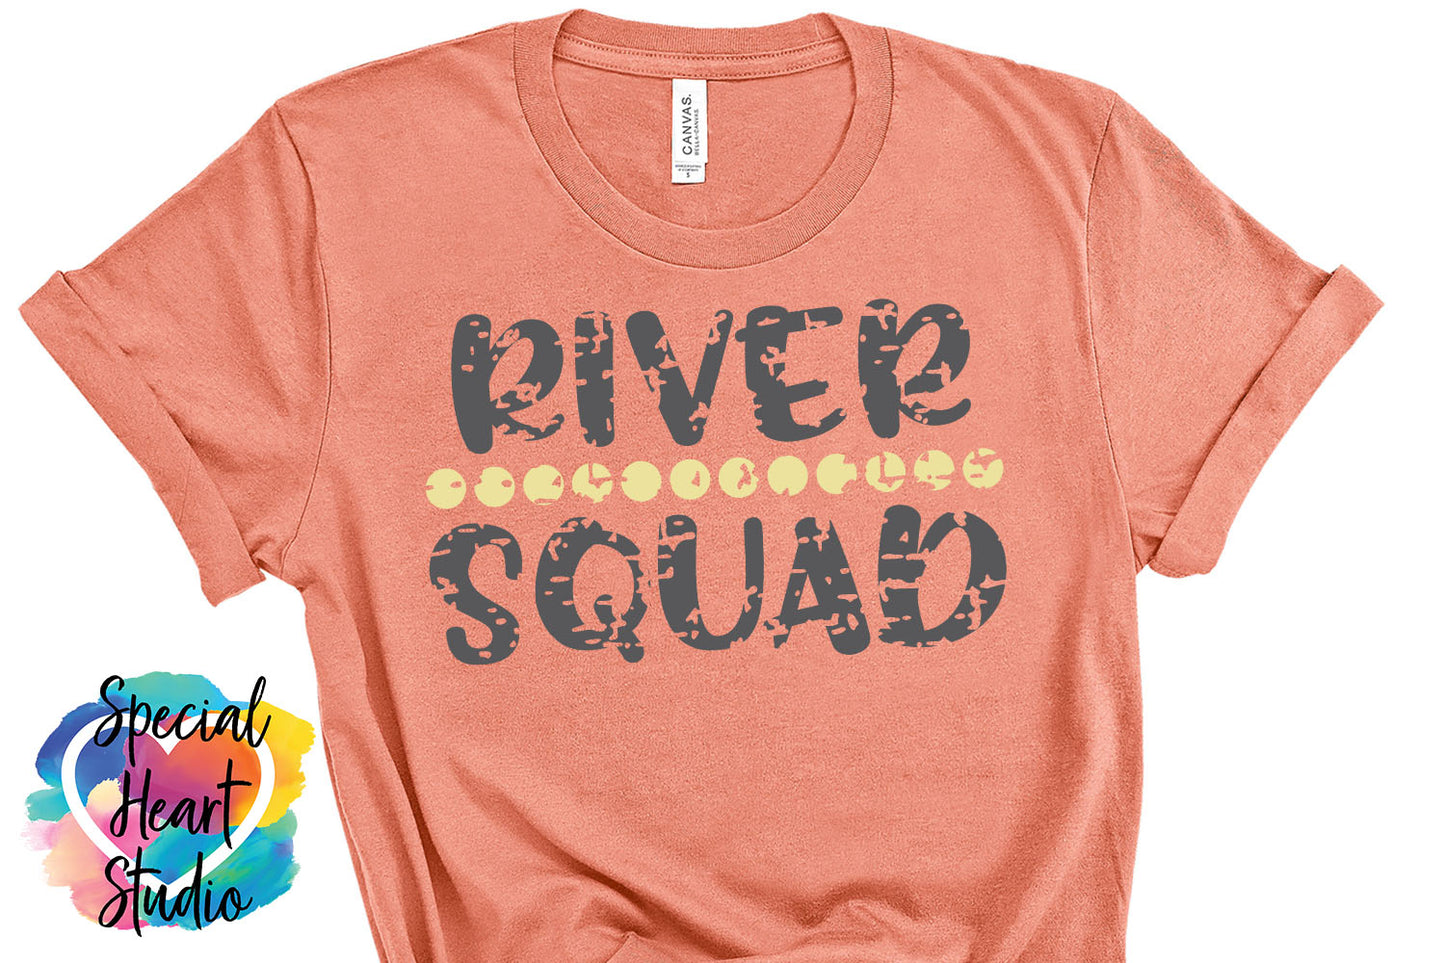 River Squad